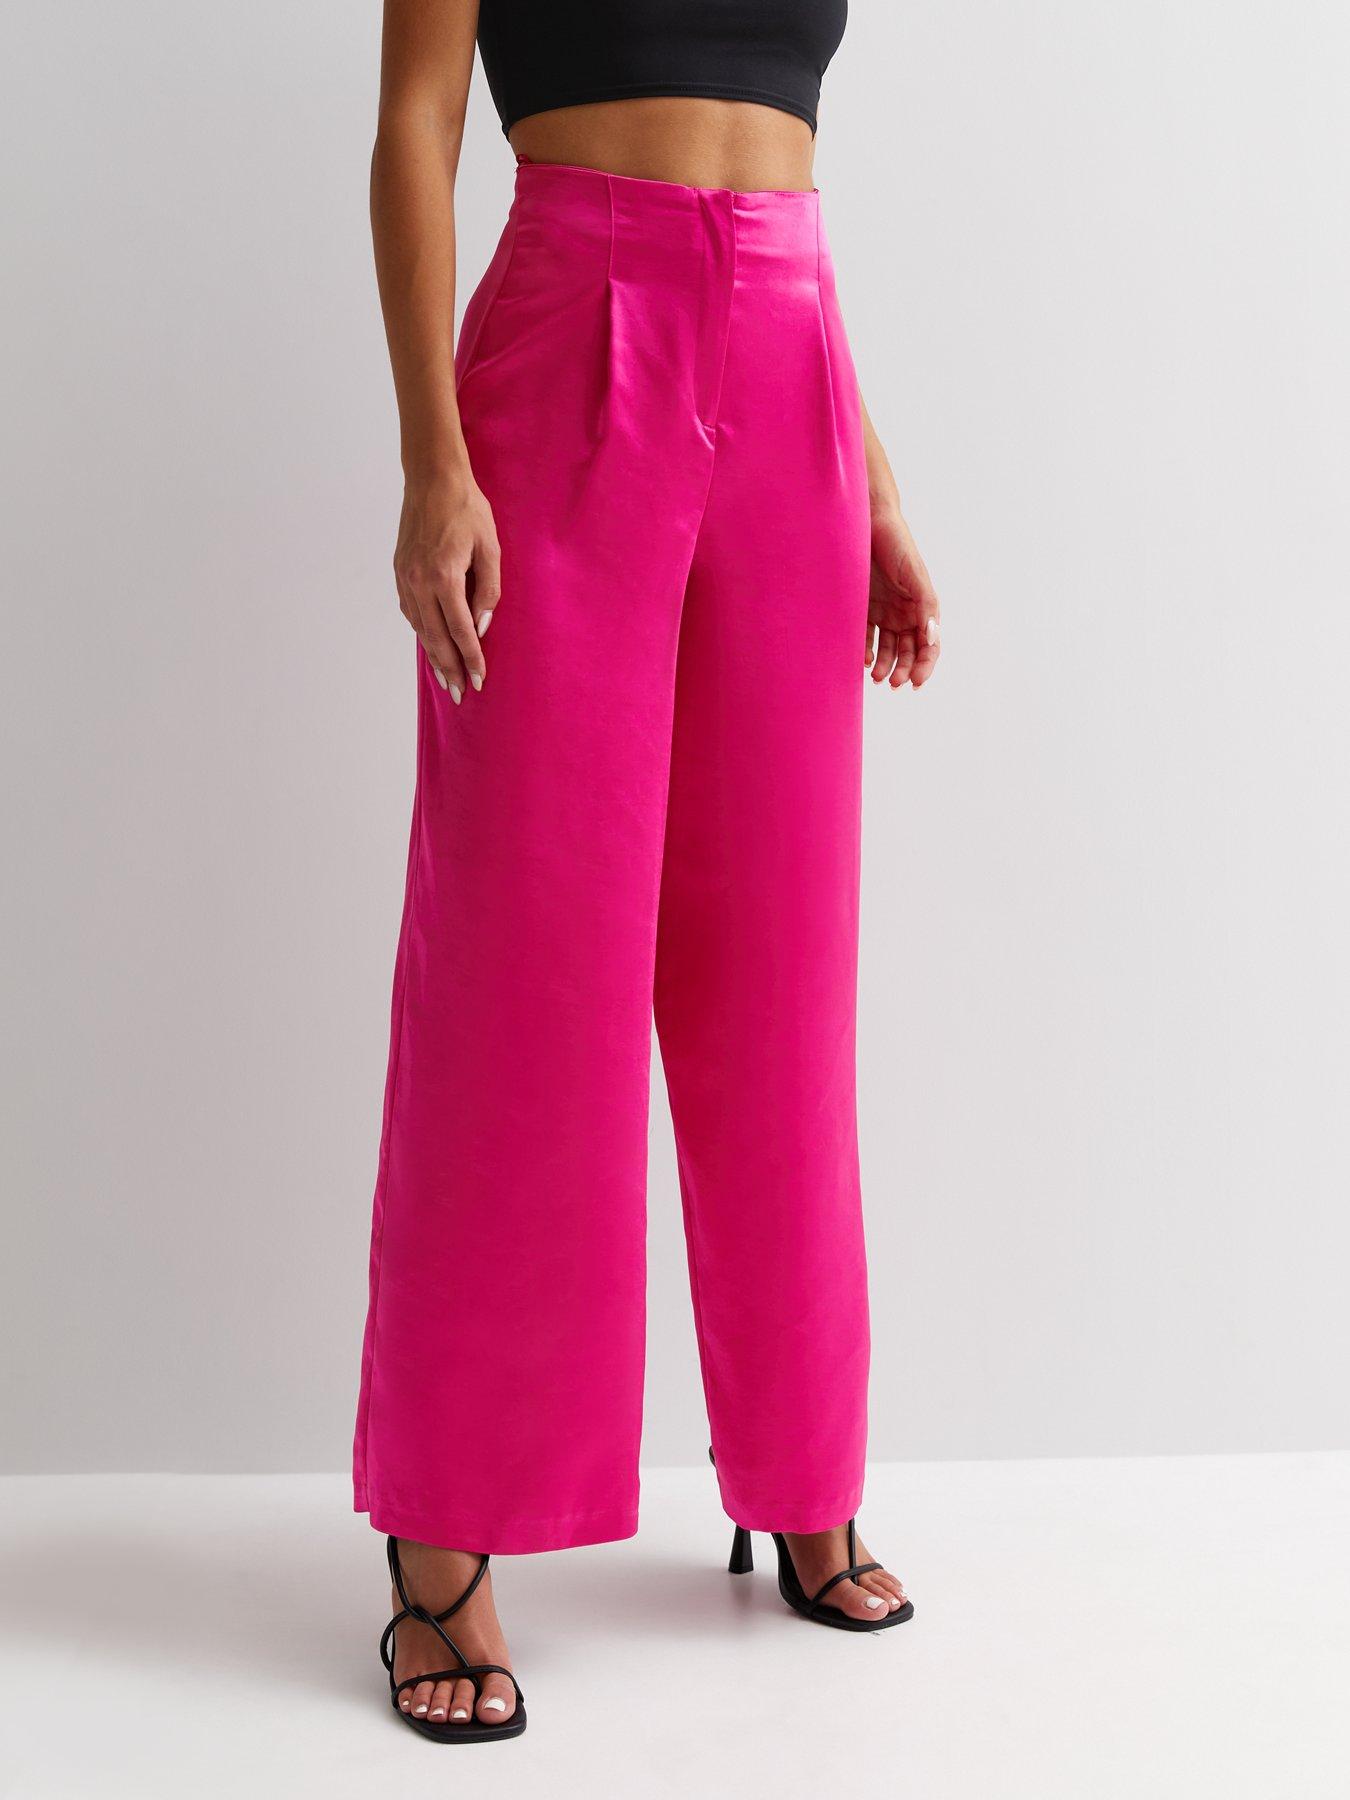 New Look Bright Pink Satin High Waist Wide Leg Trousers